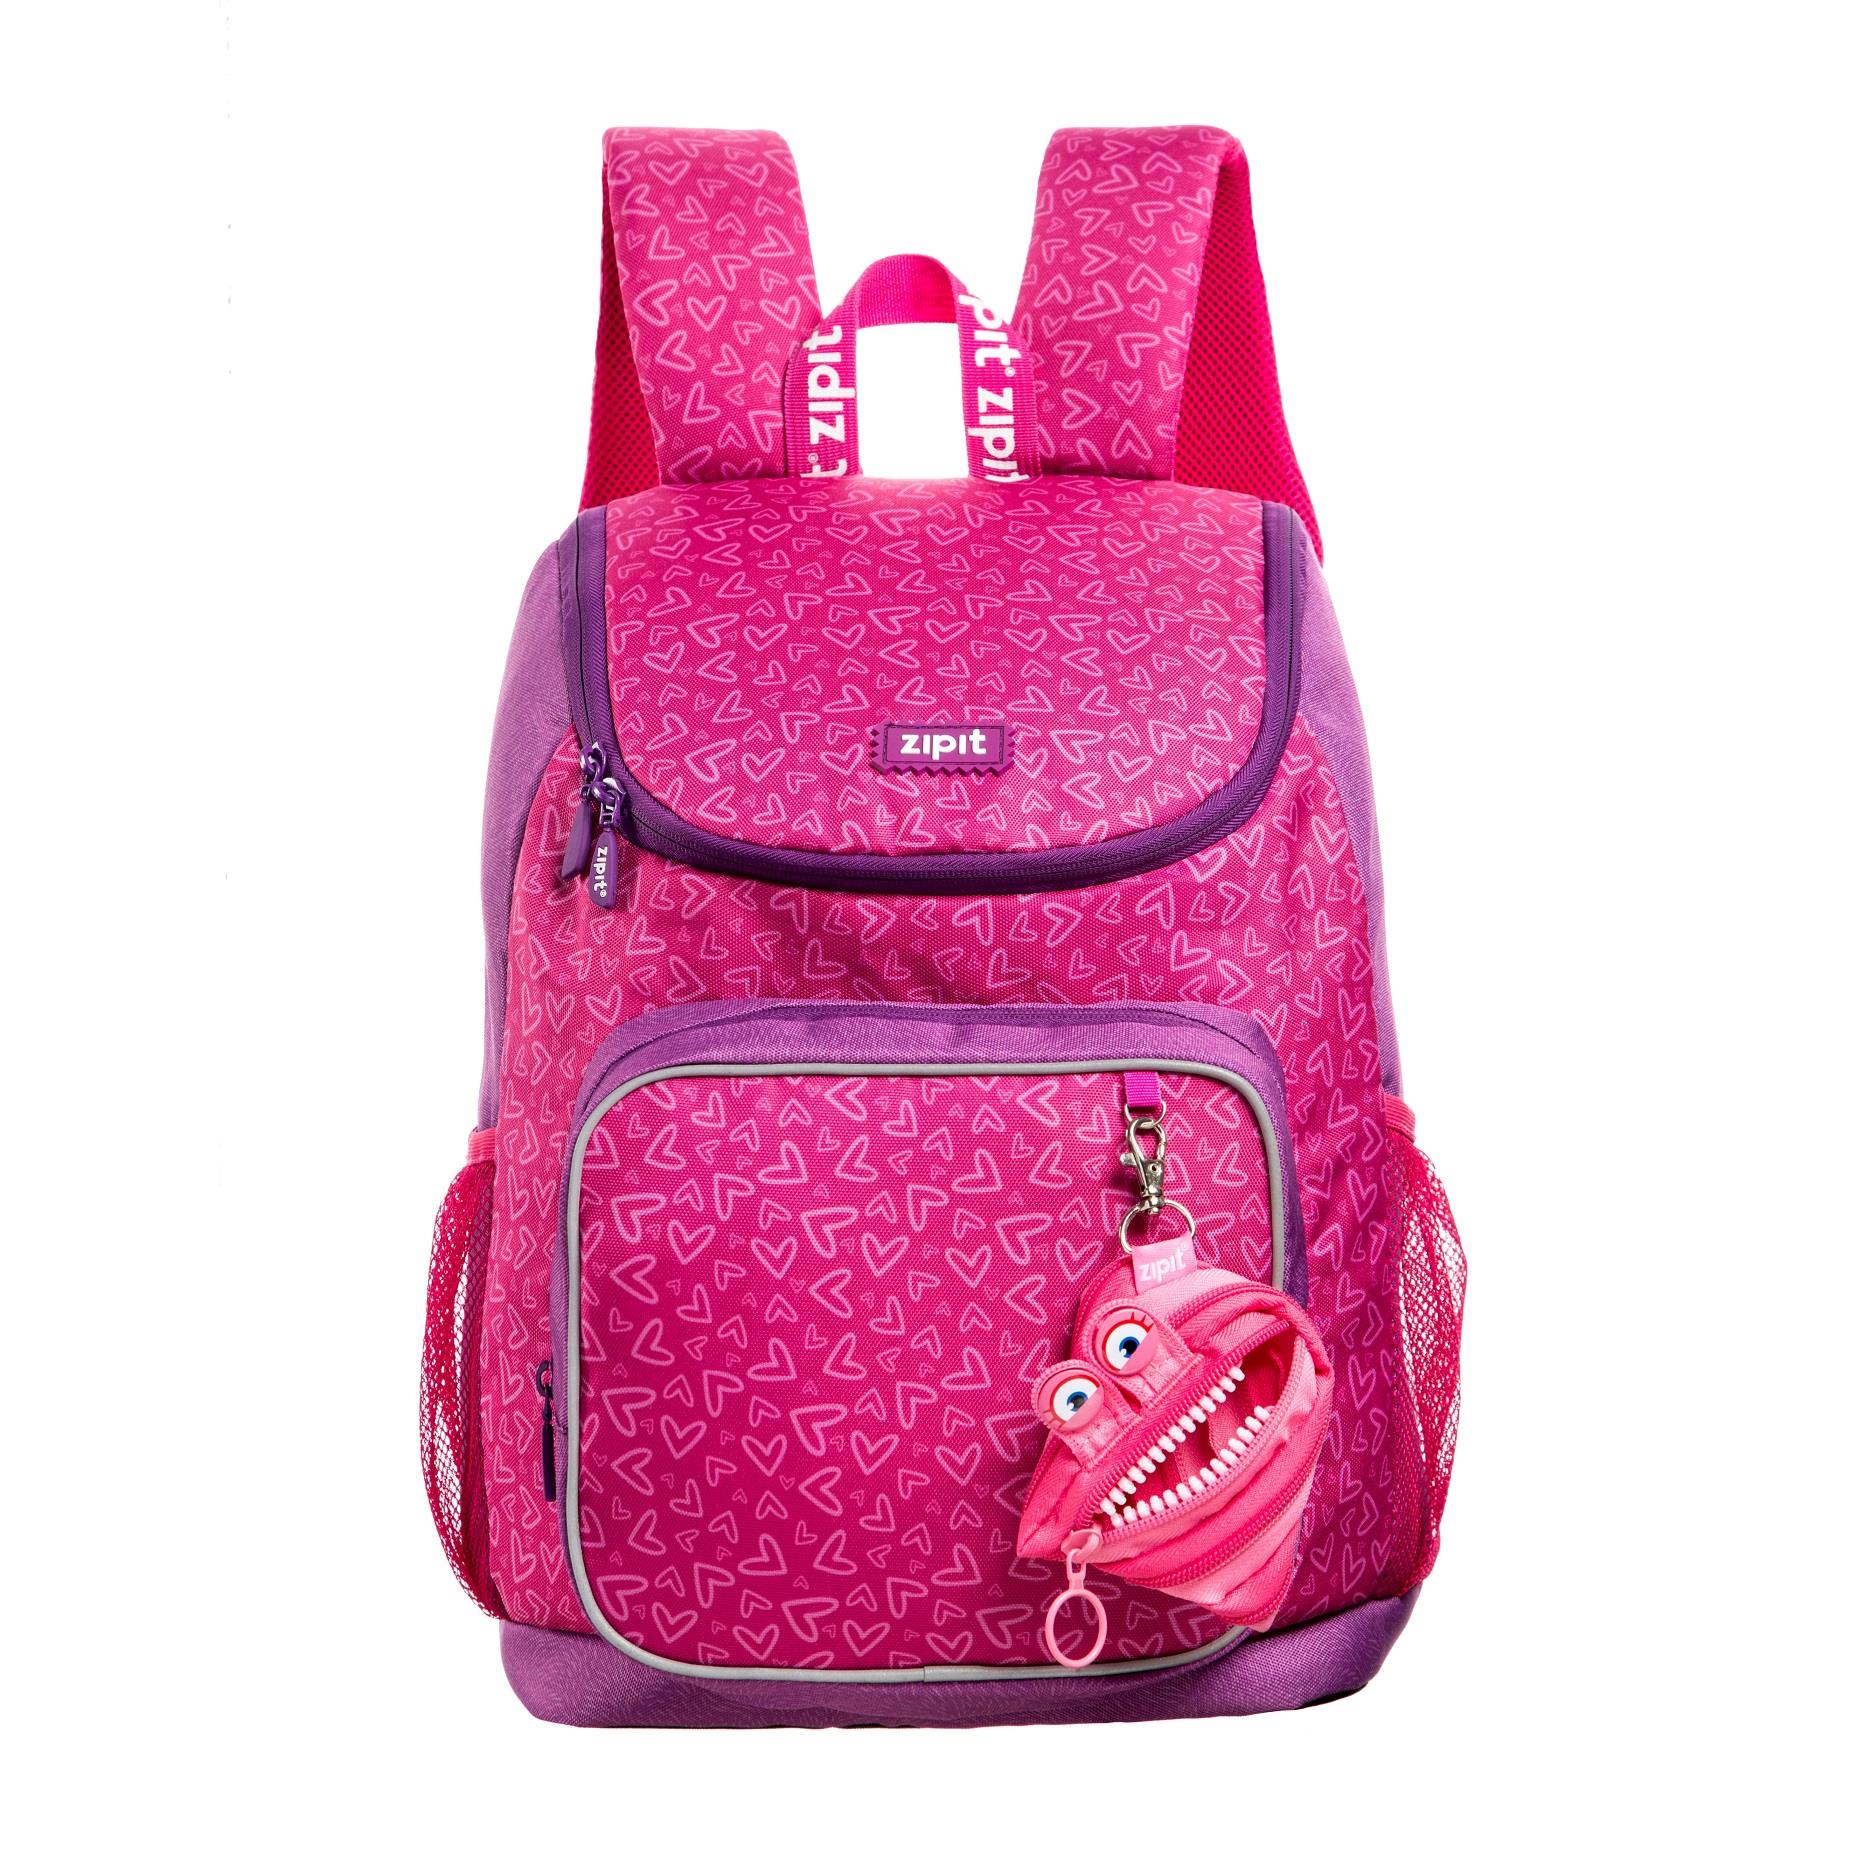 Batoh Zipit Wildlings Premium Pink s mini kapsičkou zdarma